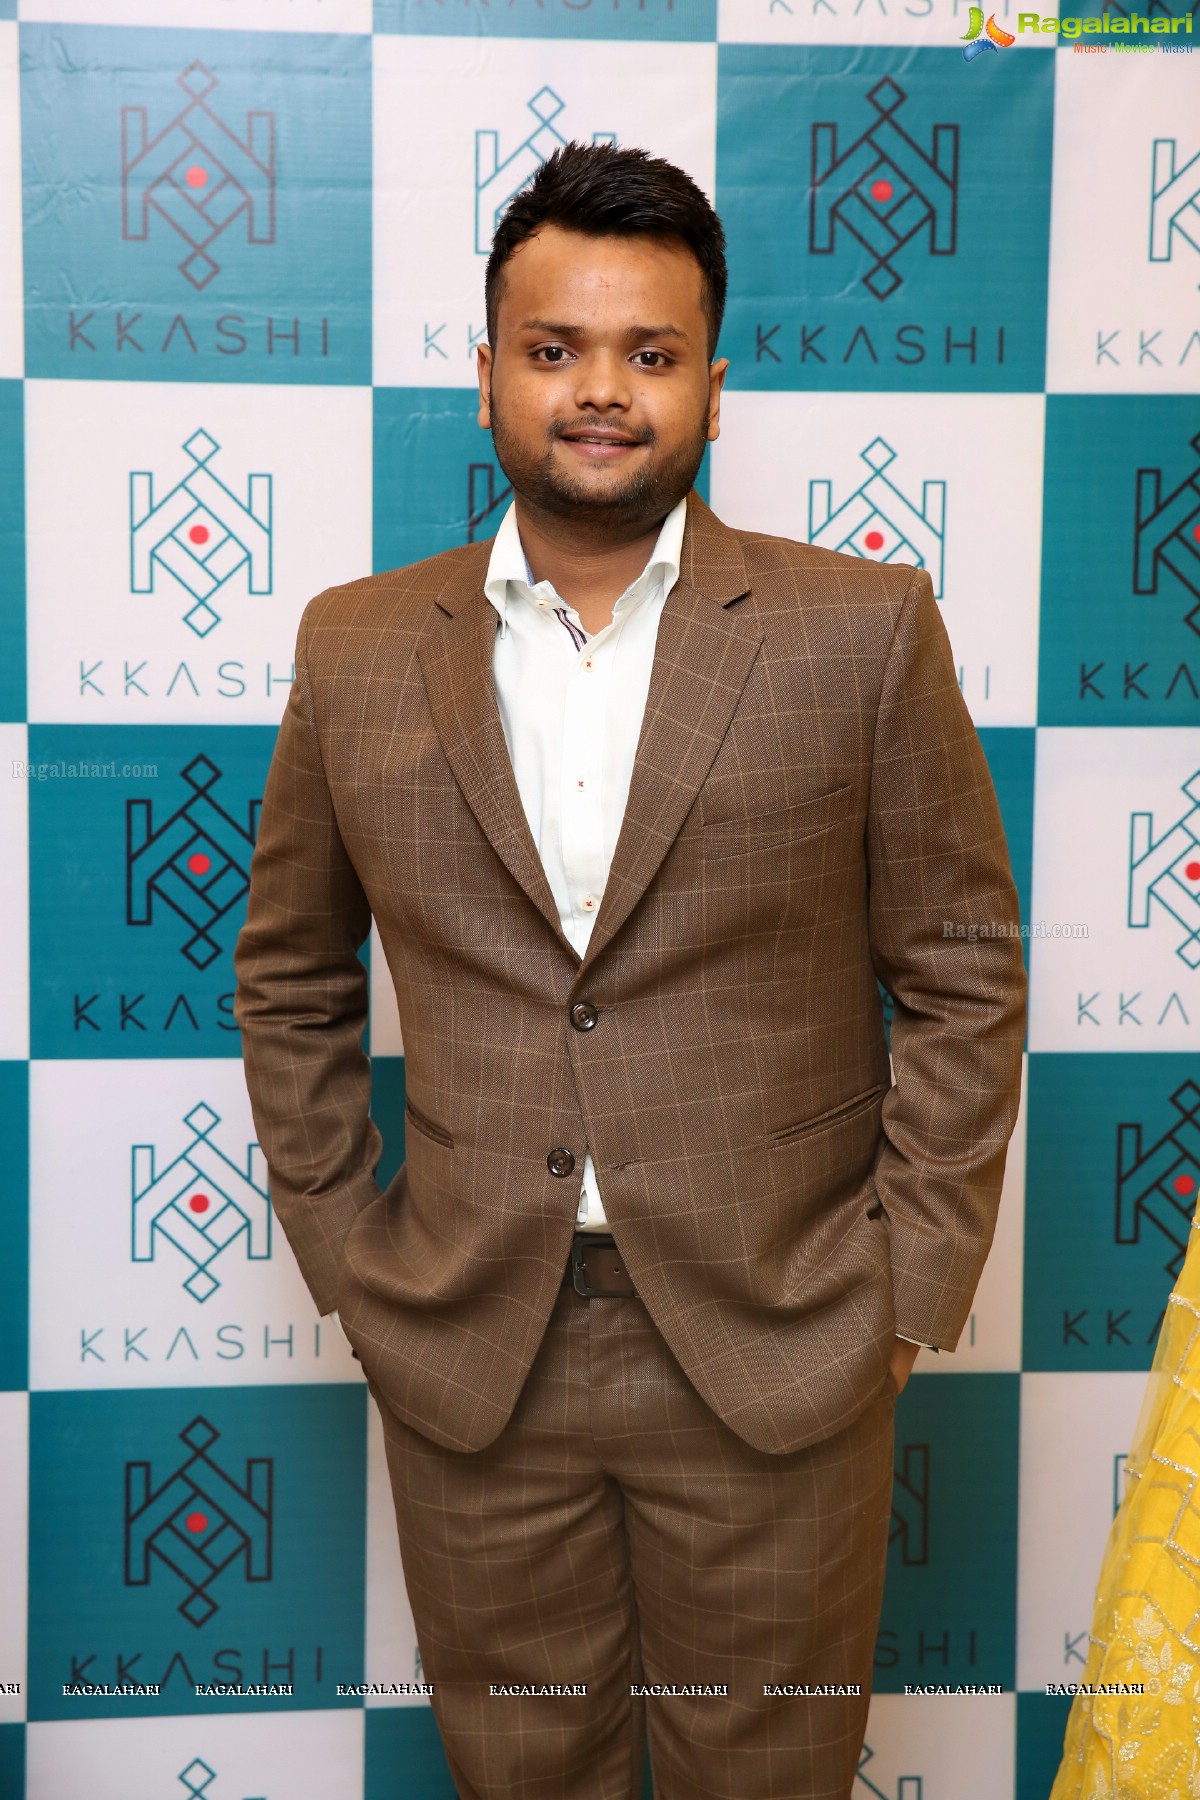 Kkashi Fashion House Launch at Banjara Hills